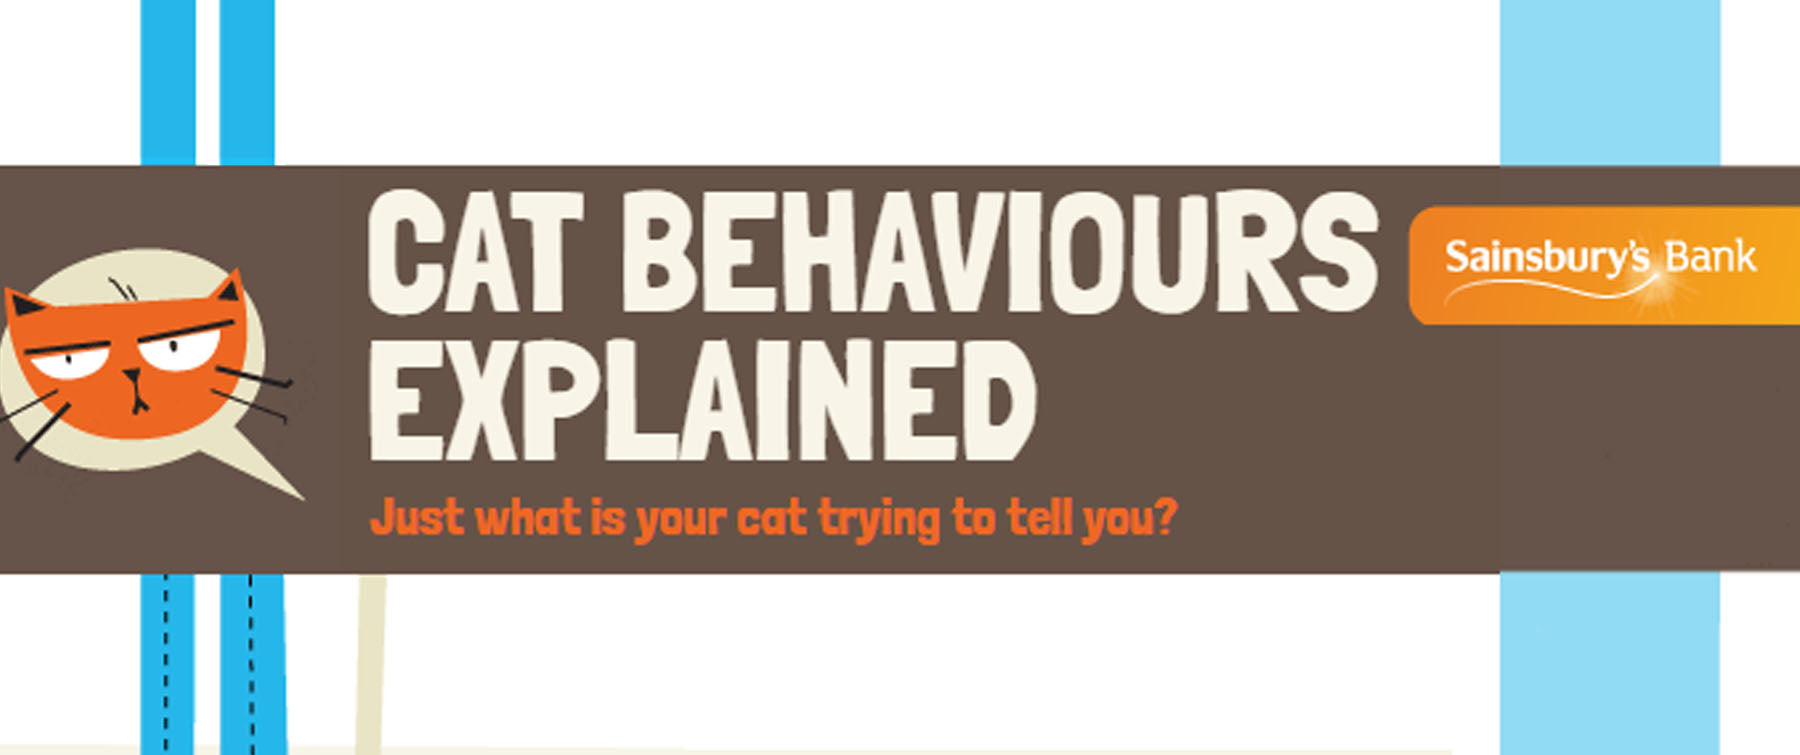 Sainsbury's Bank: Cat Behaviours Explained!